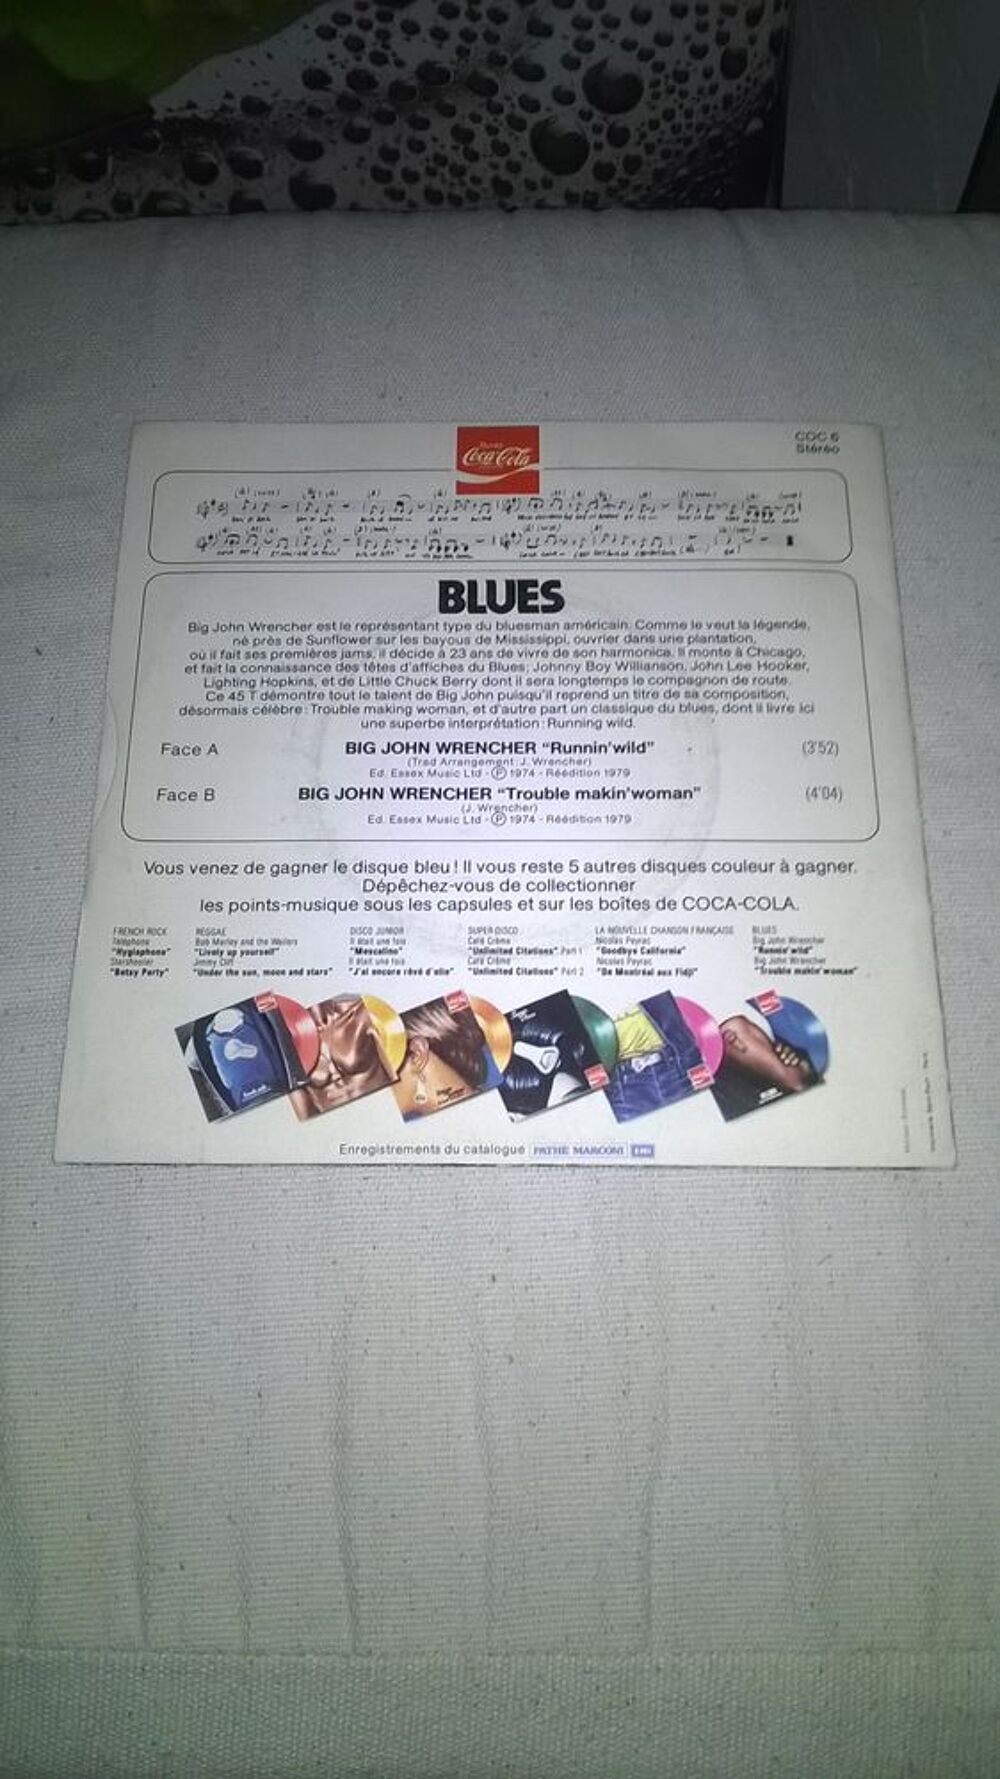 Vinyle 45 T Big John Wrencher 
Blues 
1979
Excellent eta CD et vinyles